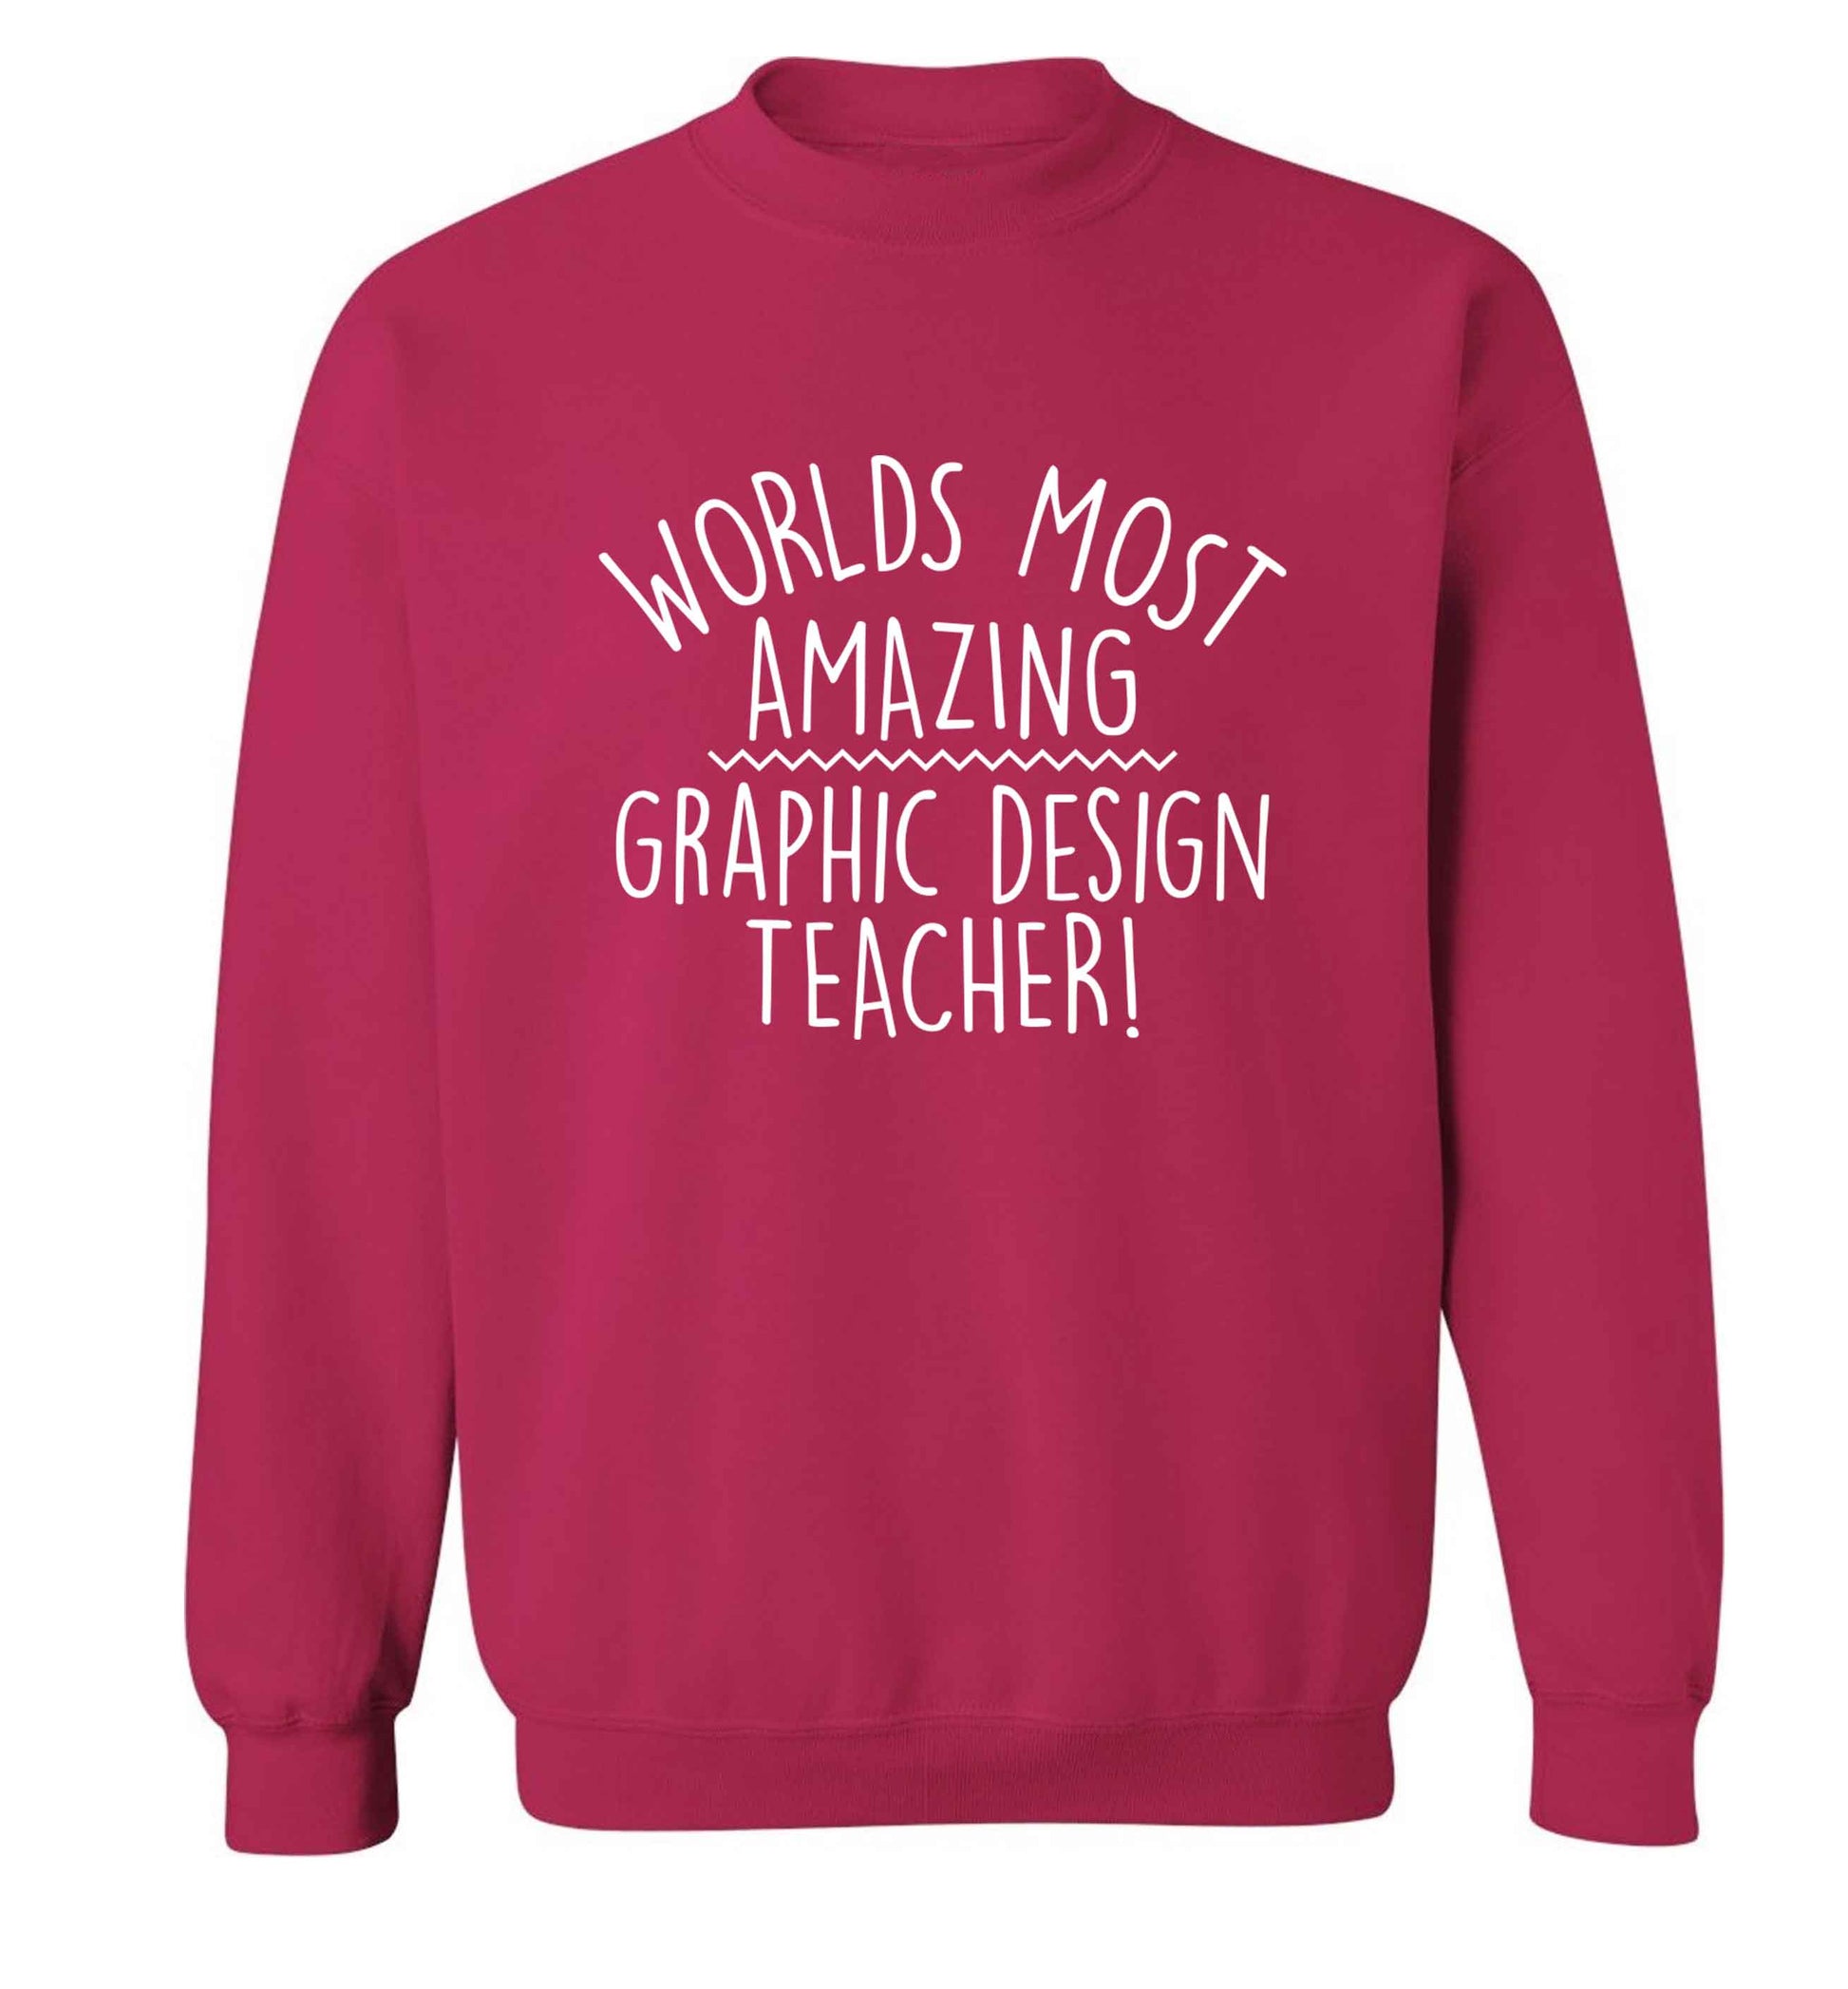 Worlds most amazing graphic design teacher adult's unisex pink sweater 2XL